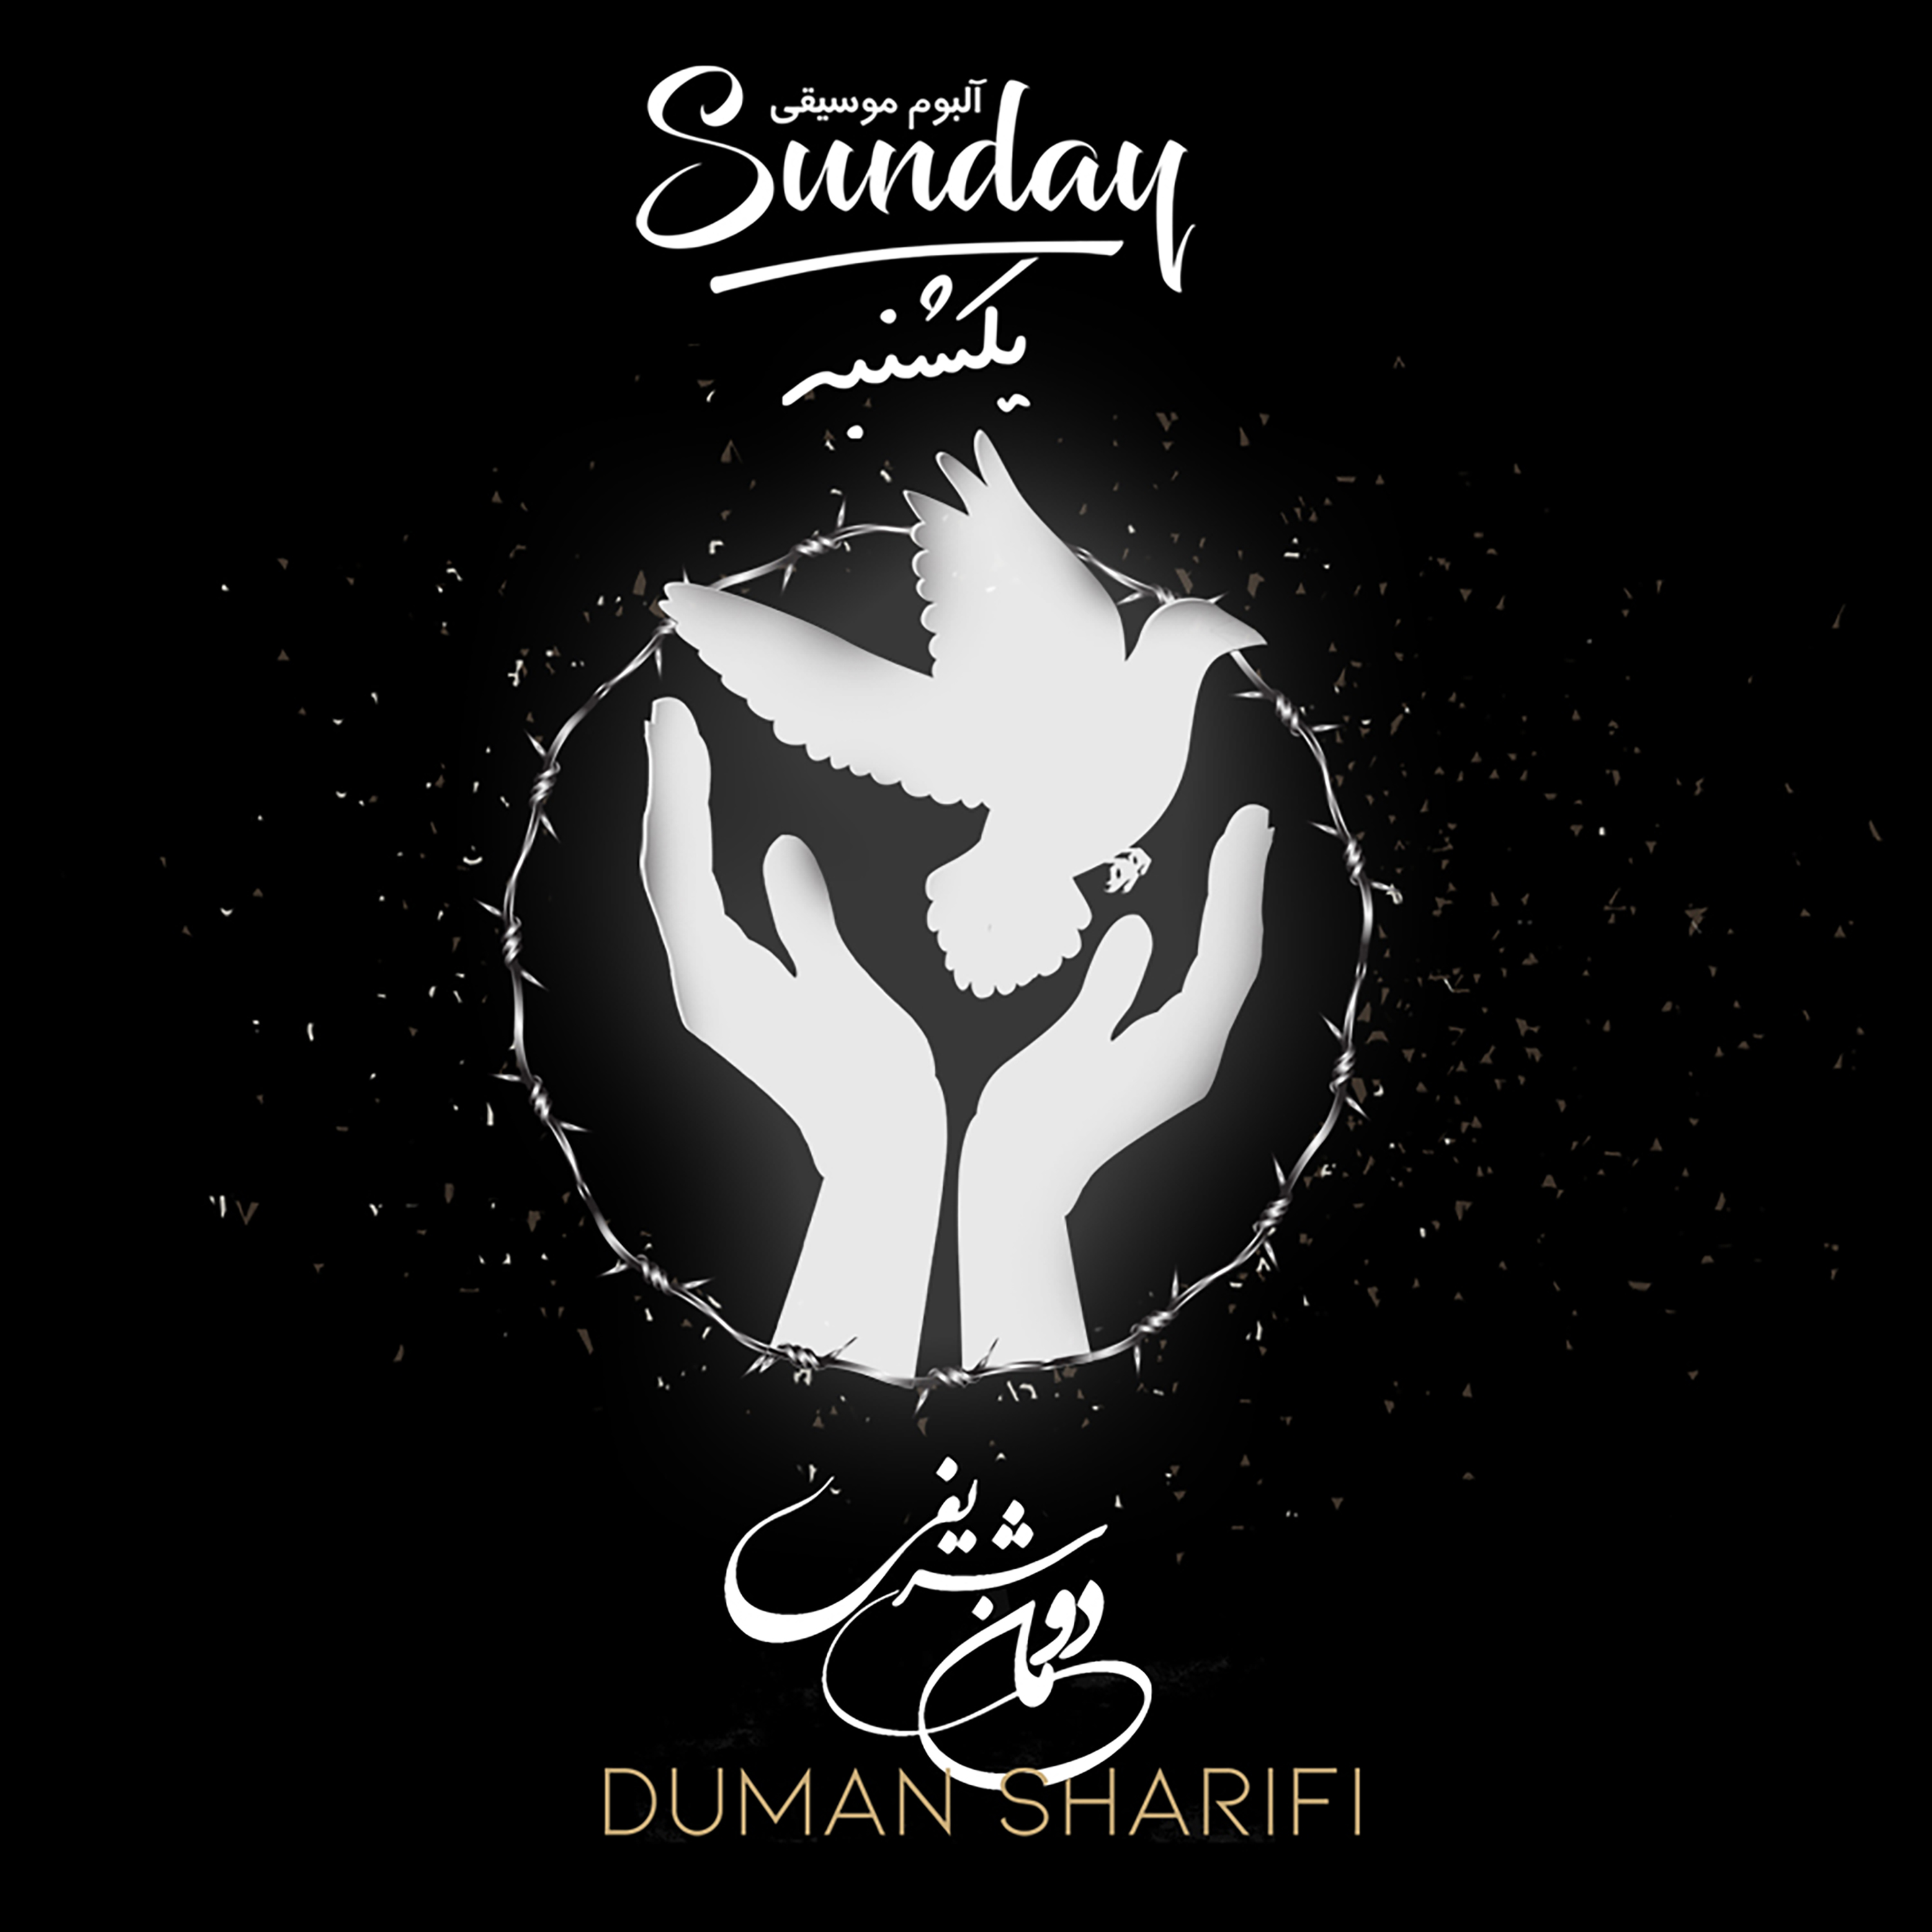  دانلود آهنگ جدید دومان شریفی - تقویم | Download New Music By Duman Sharifi - Calender